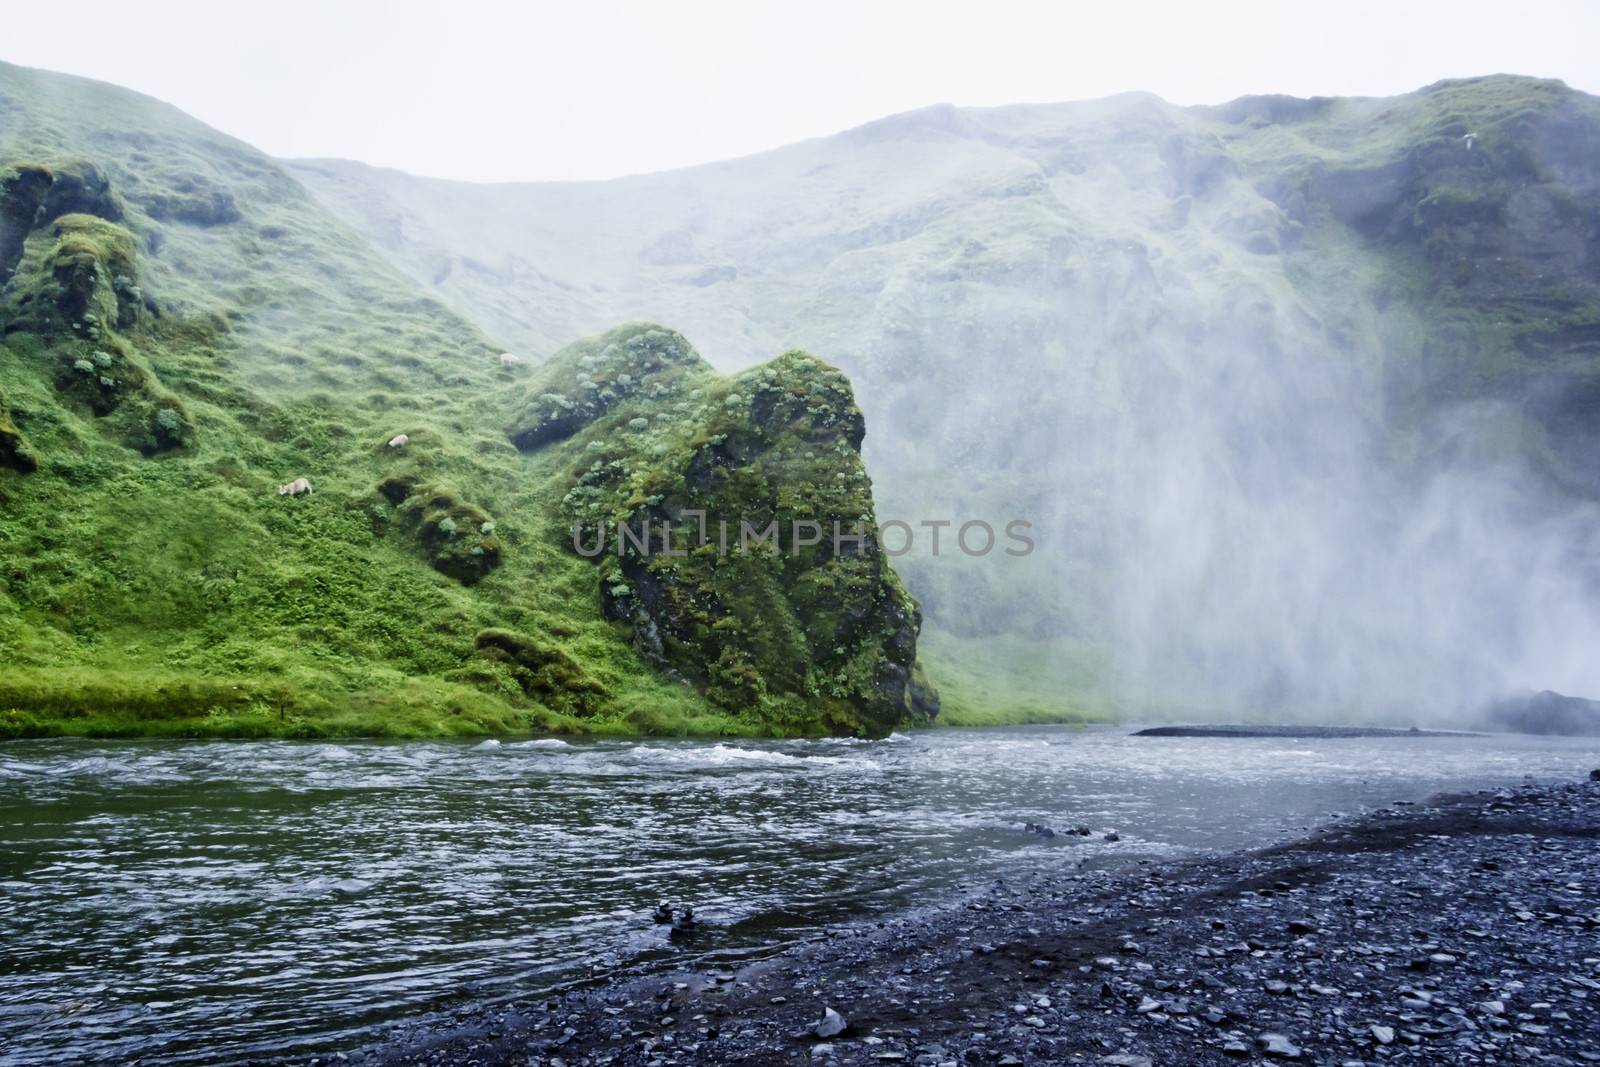 Skoga river near Skogafoss waterfall in Iceland, summer